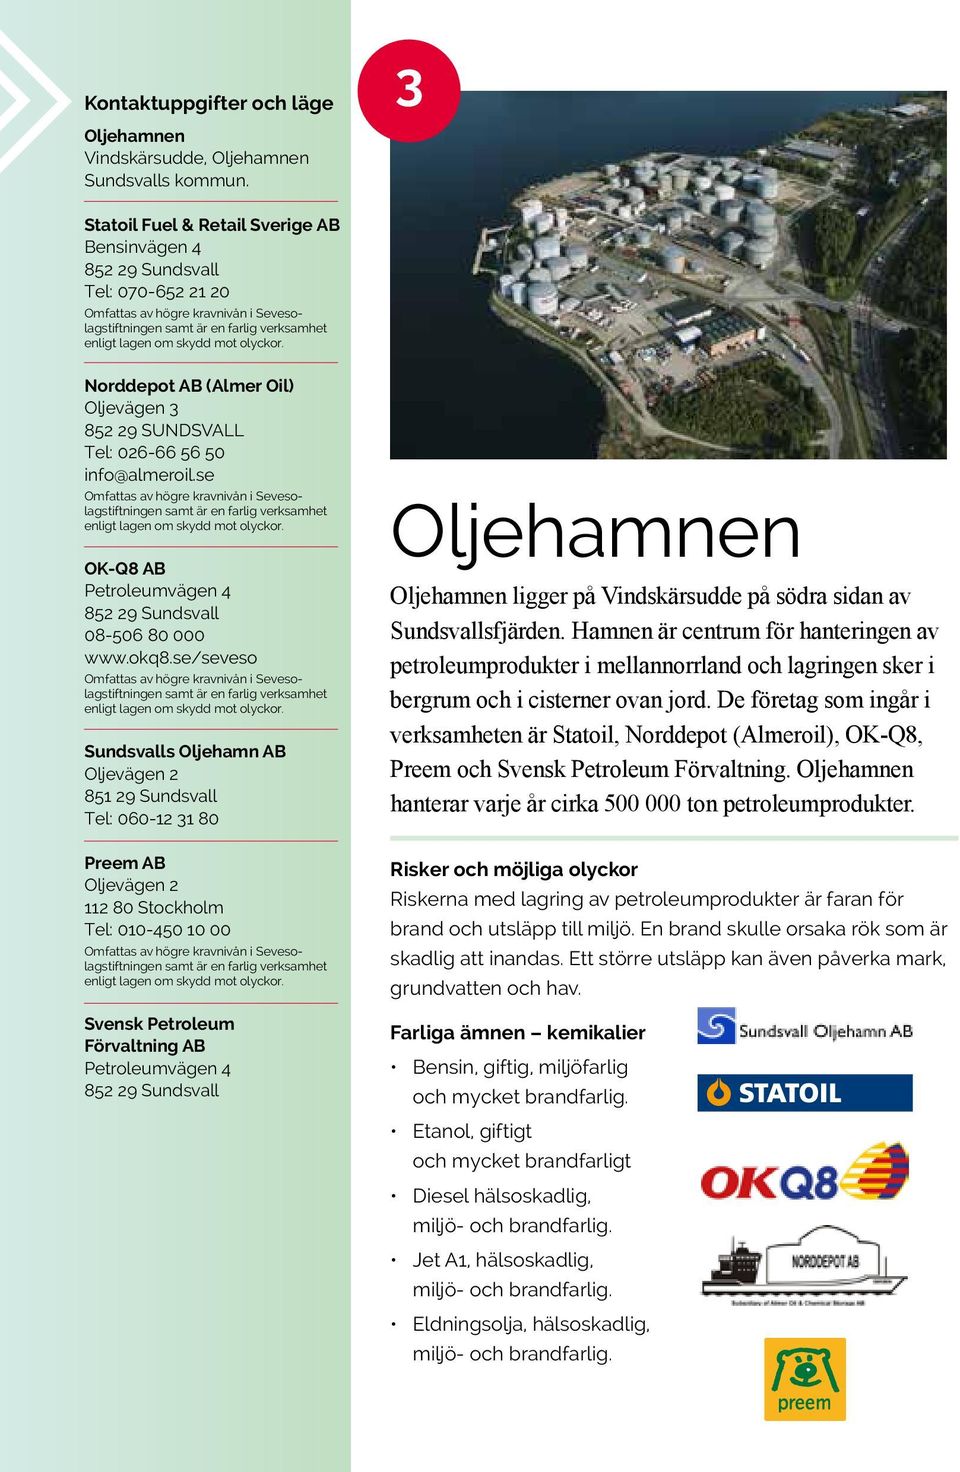 se OK-Q8 AB Petroleumvägen 4 852 29 Sundsvall 08-506 80 000 www.okq8.